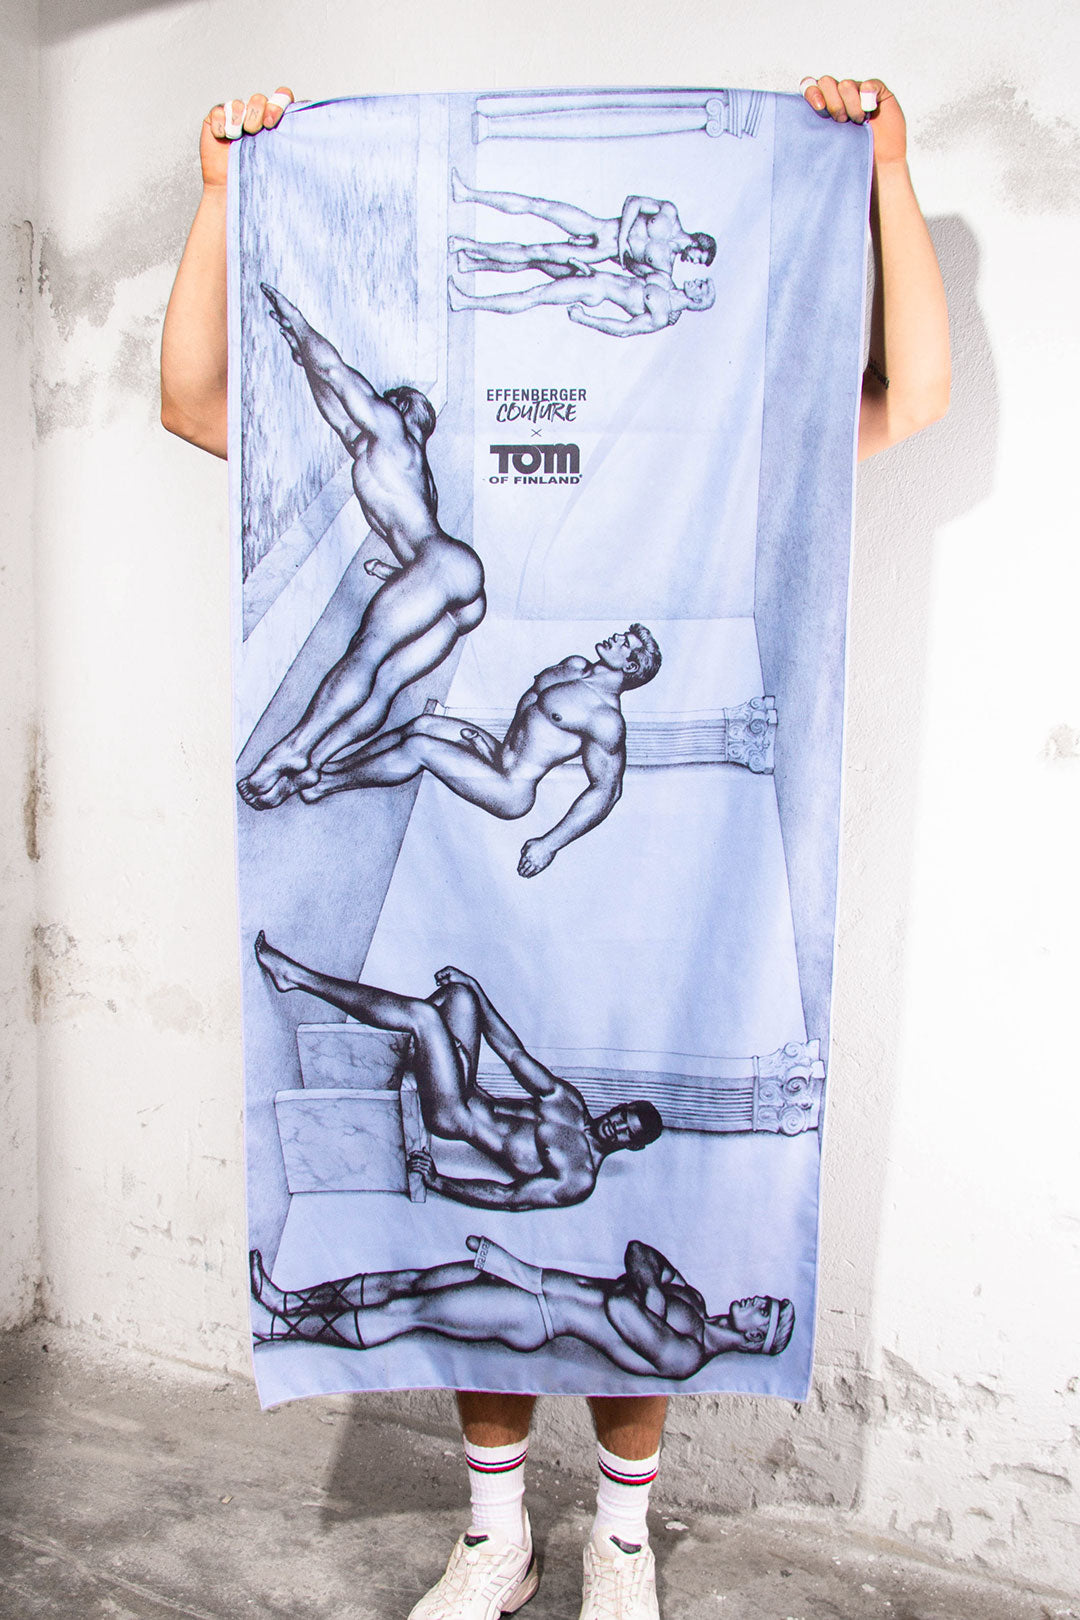 Tom of Finland® Towel